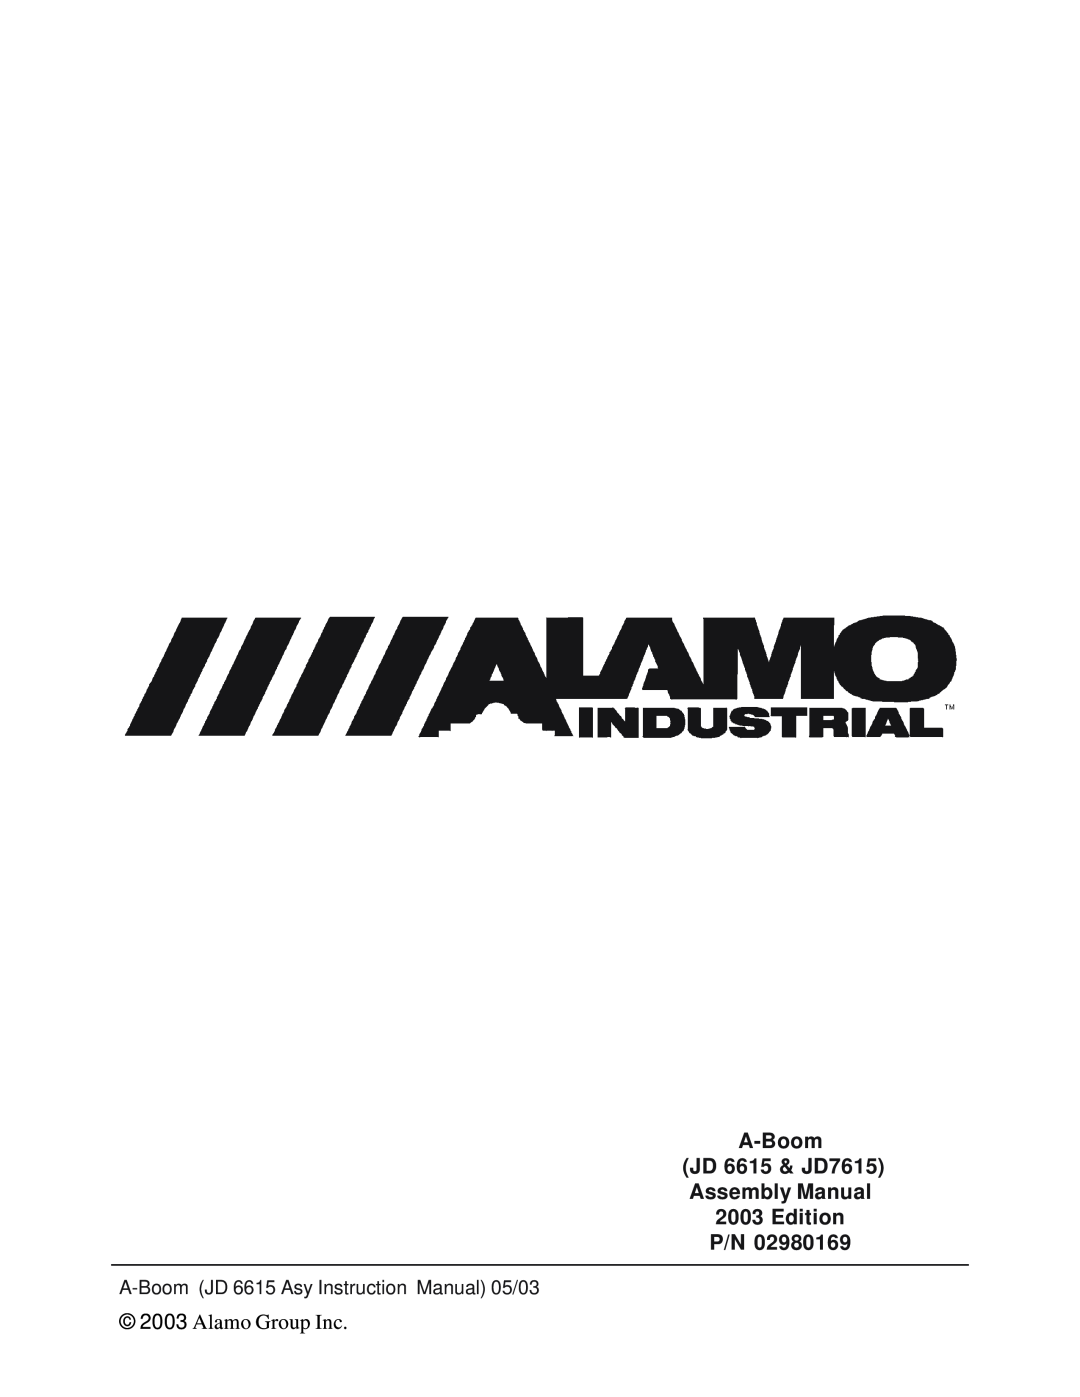 Alamo DSEB-D16/SAS instruction manual A-Boom JD 6615 & JD7615 Assembly Manual 2003 Edition P/N, Alamo Group Inc 